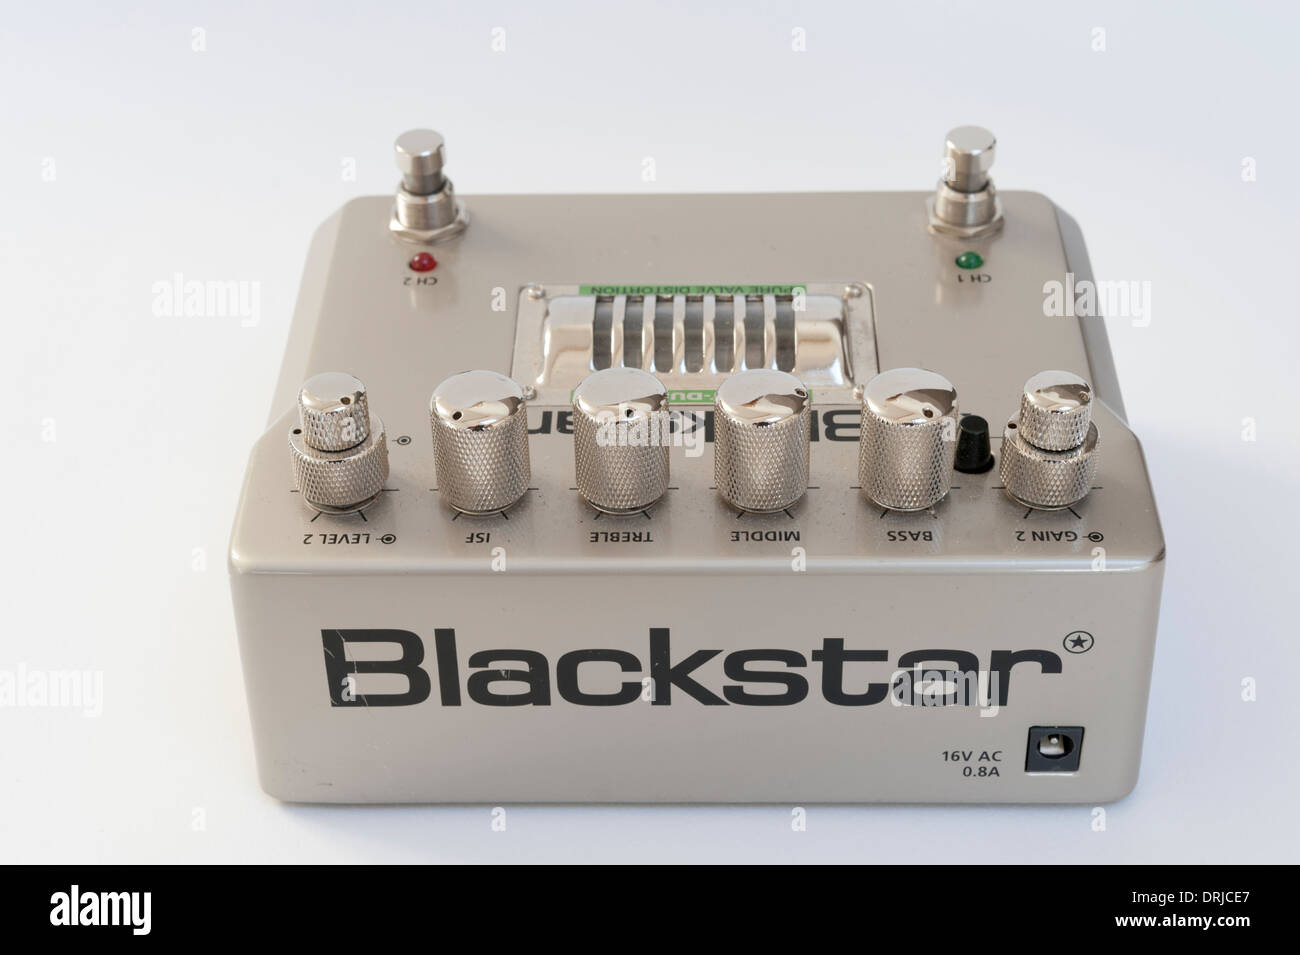 Una Blackstar HT dual valvola pedale overdrive per chitarra. Foto Stock